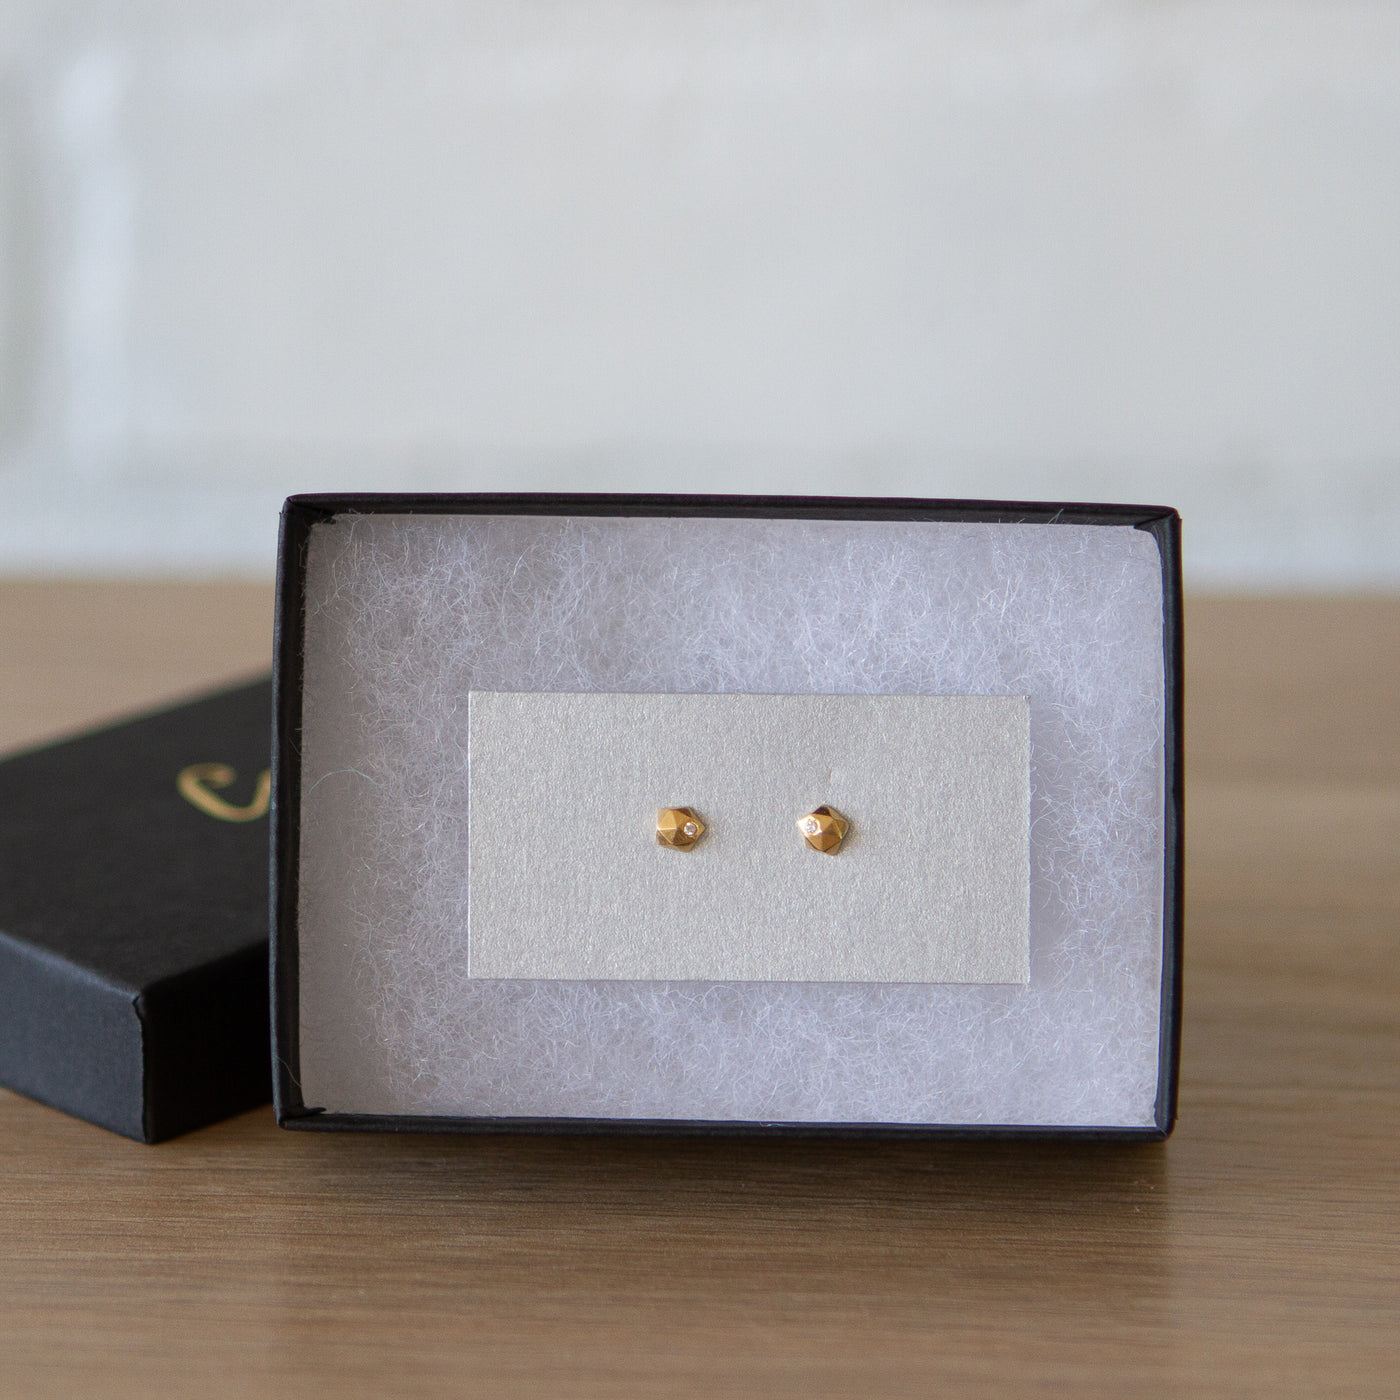 Vermeil Micro Fragment Diamond Stud Earrings by Corey Egan in a gift box